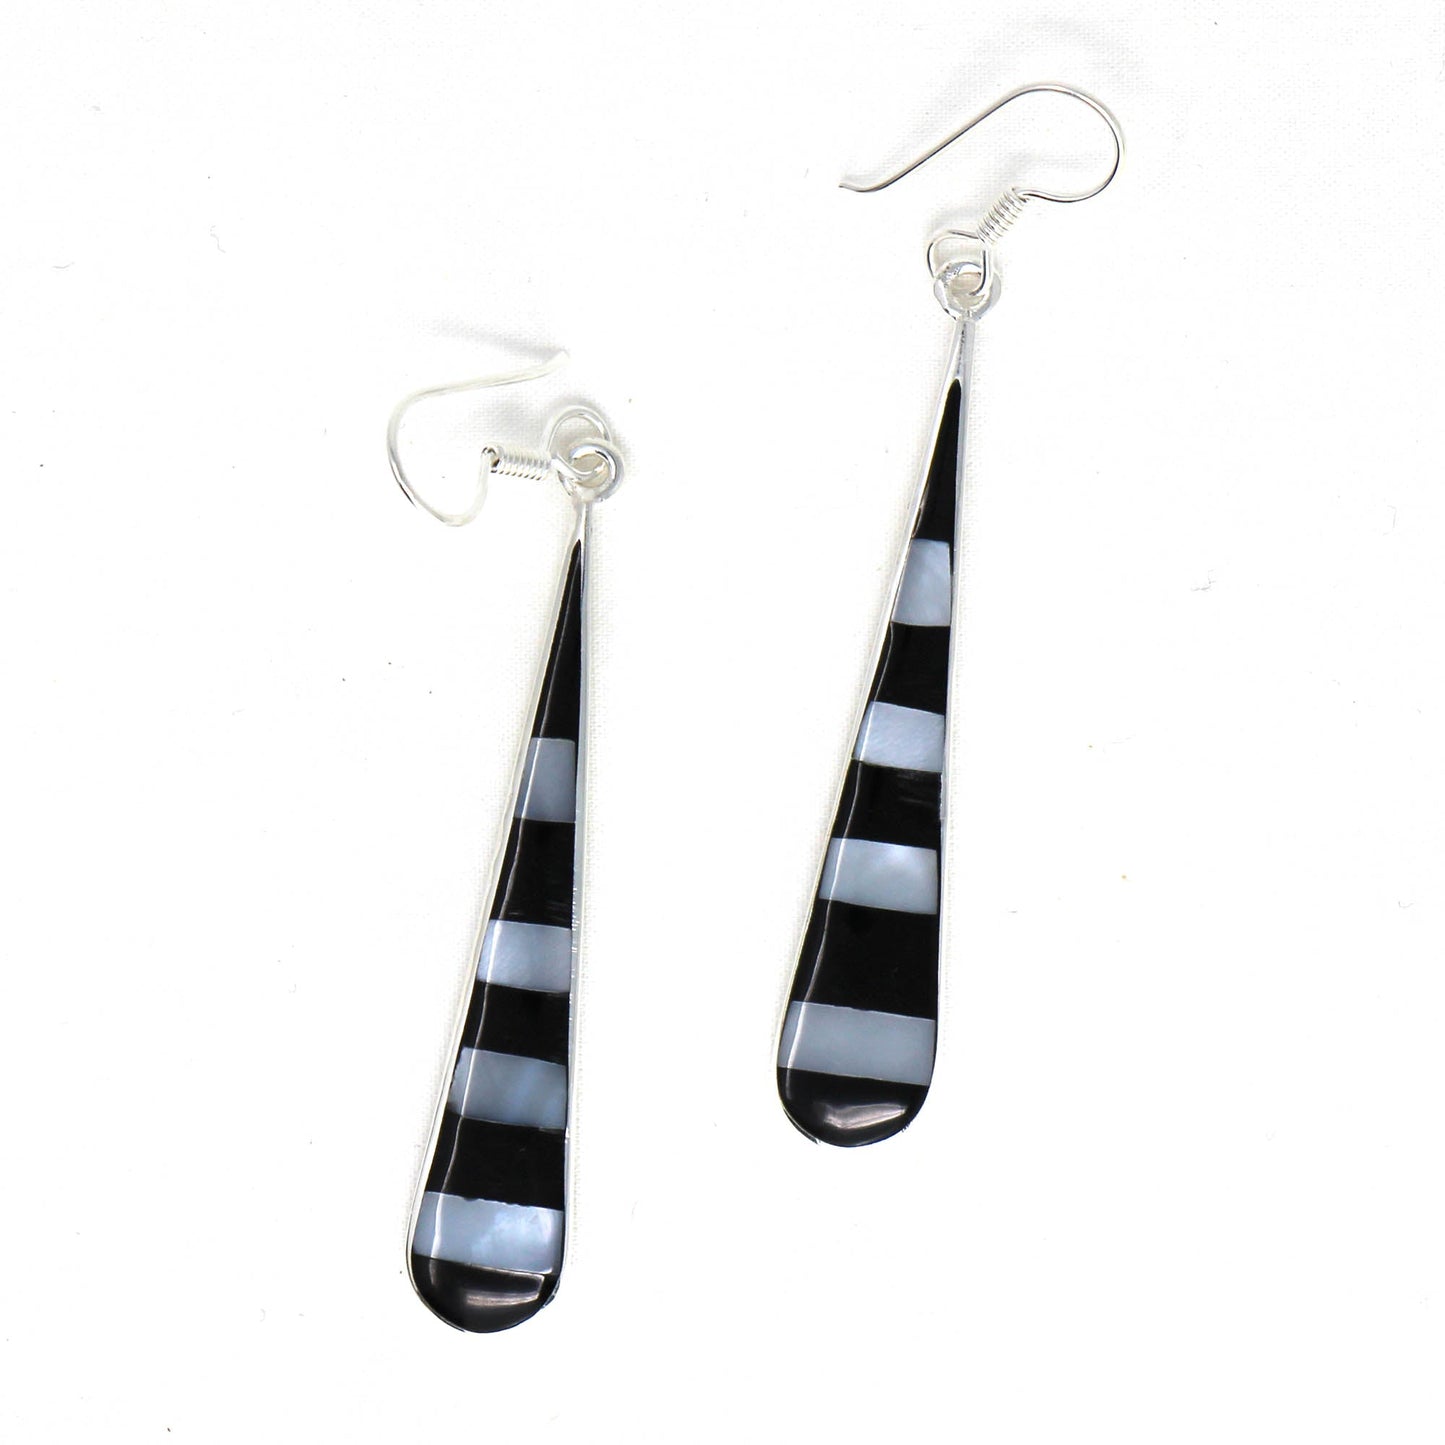 Taxco Silver Black Onyz & Abalone Zebra Long Teardrop Earrings - Recetas Fair Trade